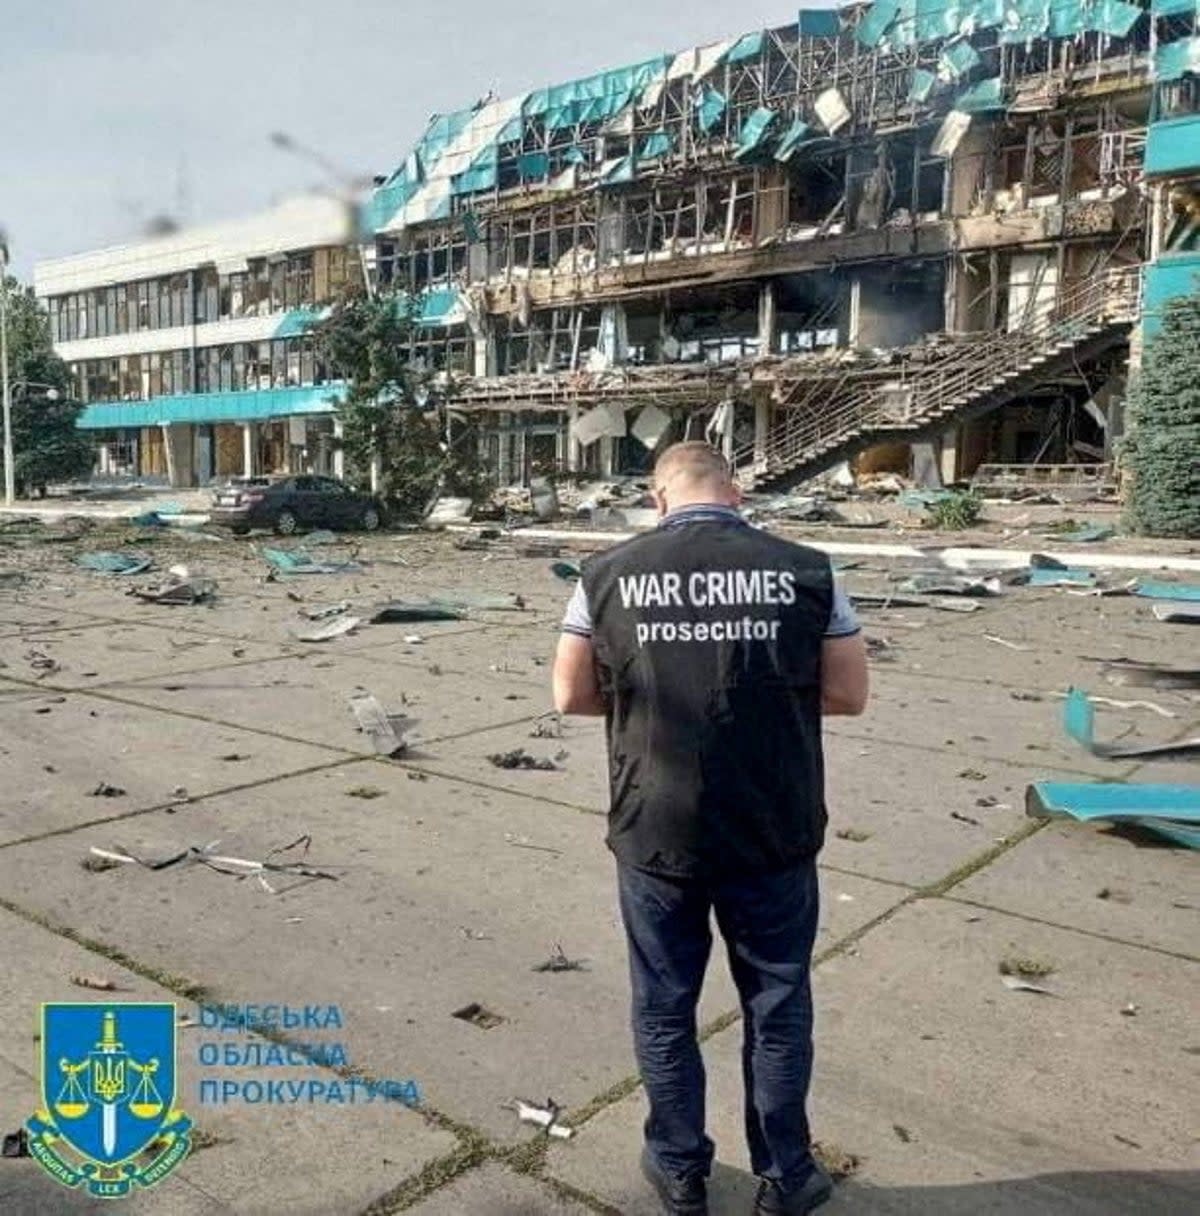 An inspector surveys the damage at a grain port facility in, Izmail, southern Ukraine (via REUTERS)